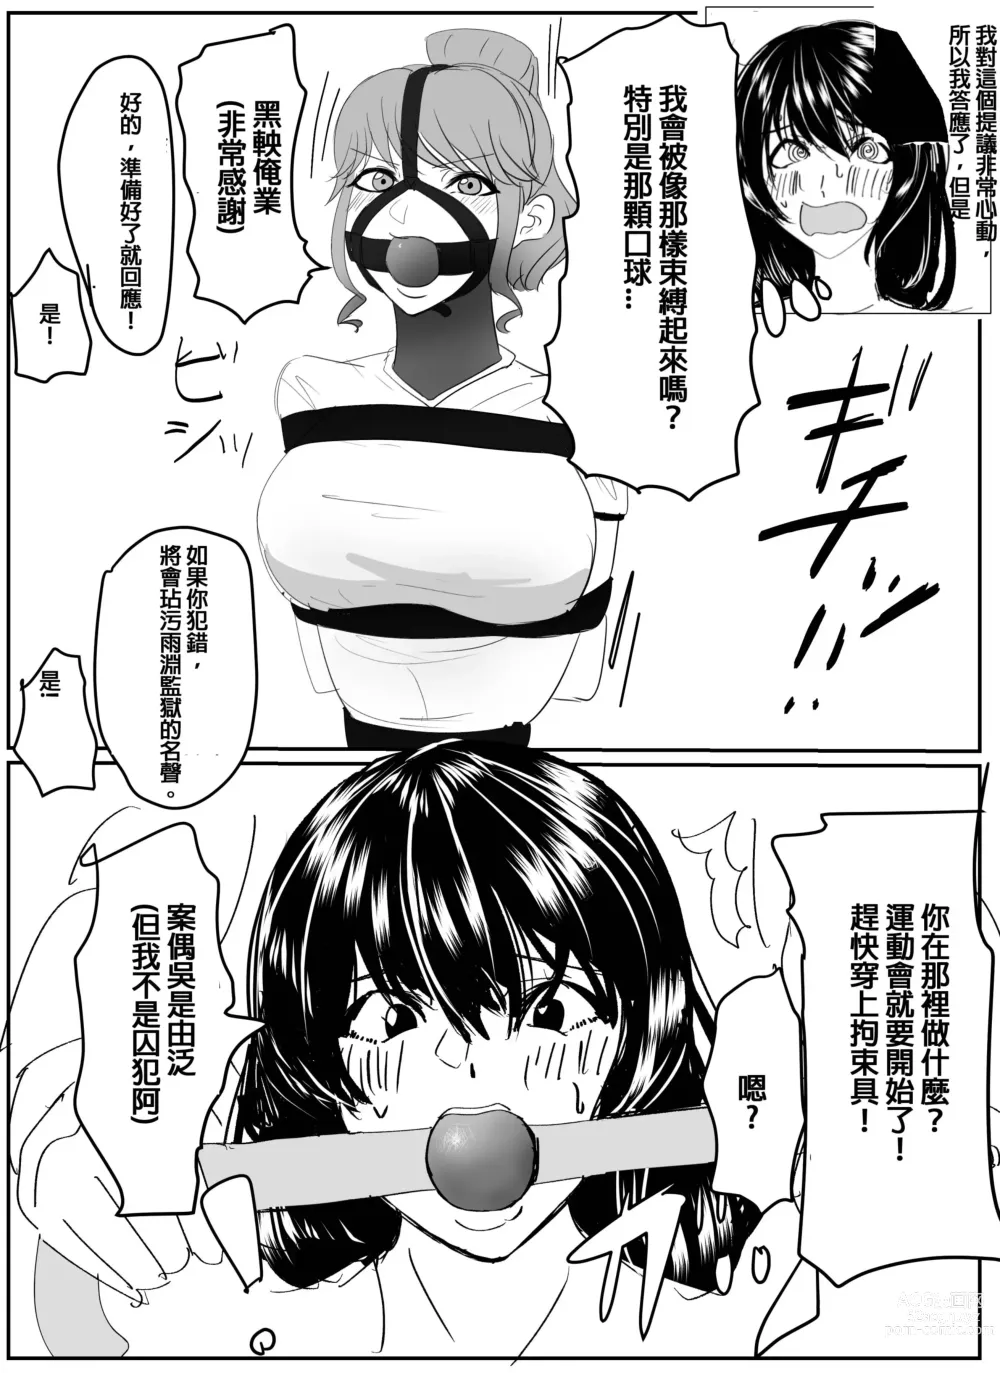 Page 4 of doujinshi 佳奈美囚人運動會!